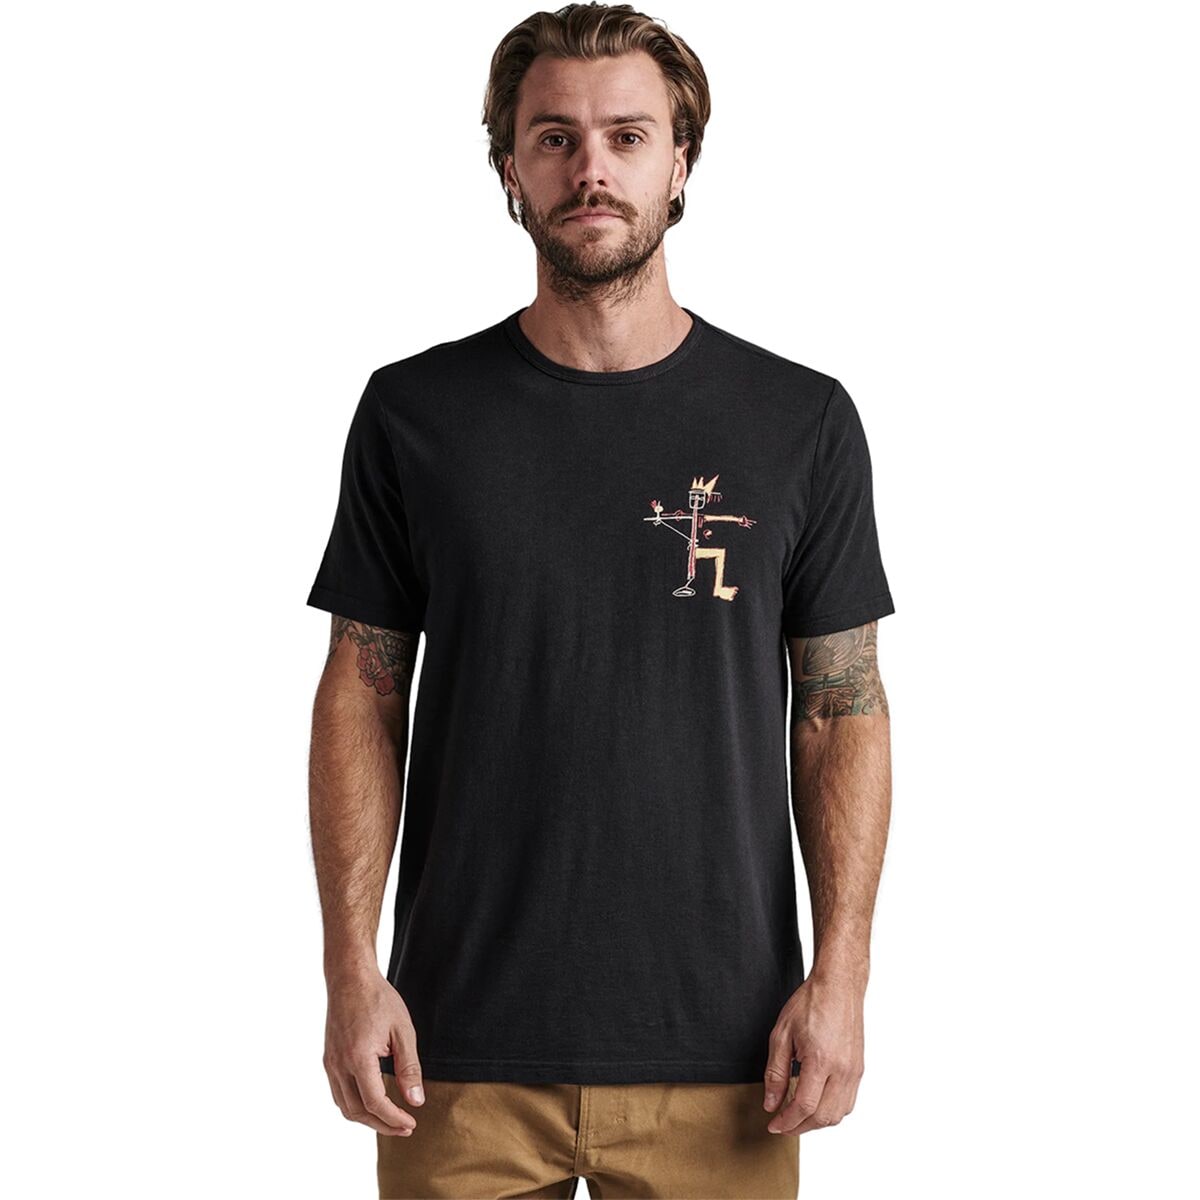 Basquiat Thesis T-Shirt - Men